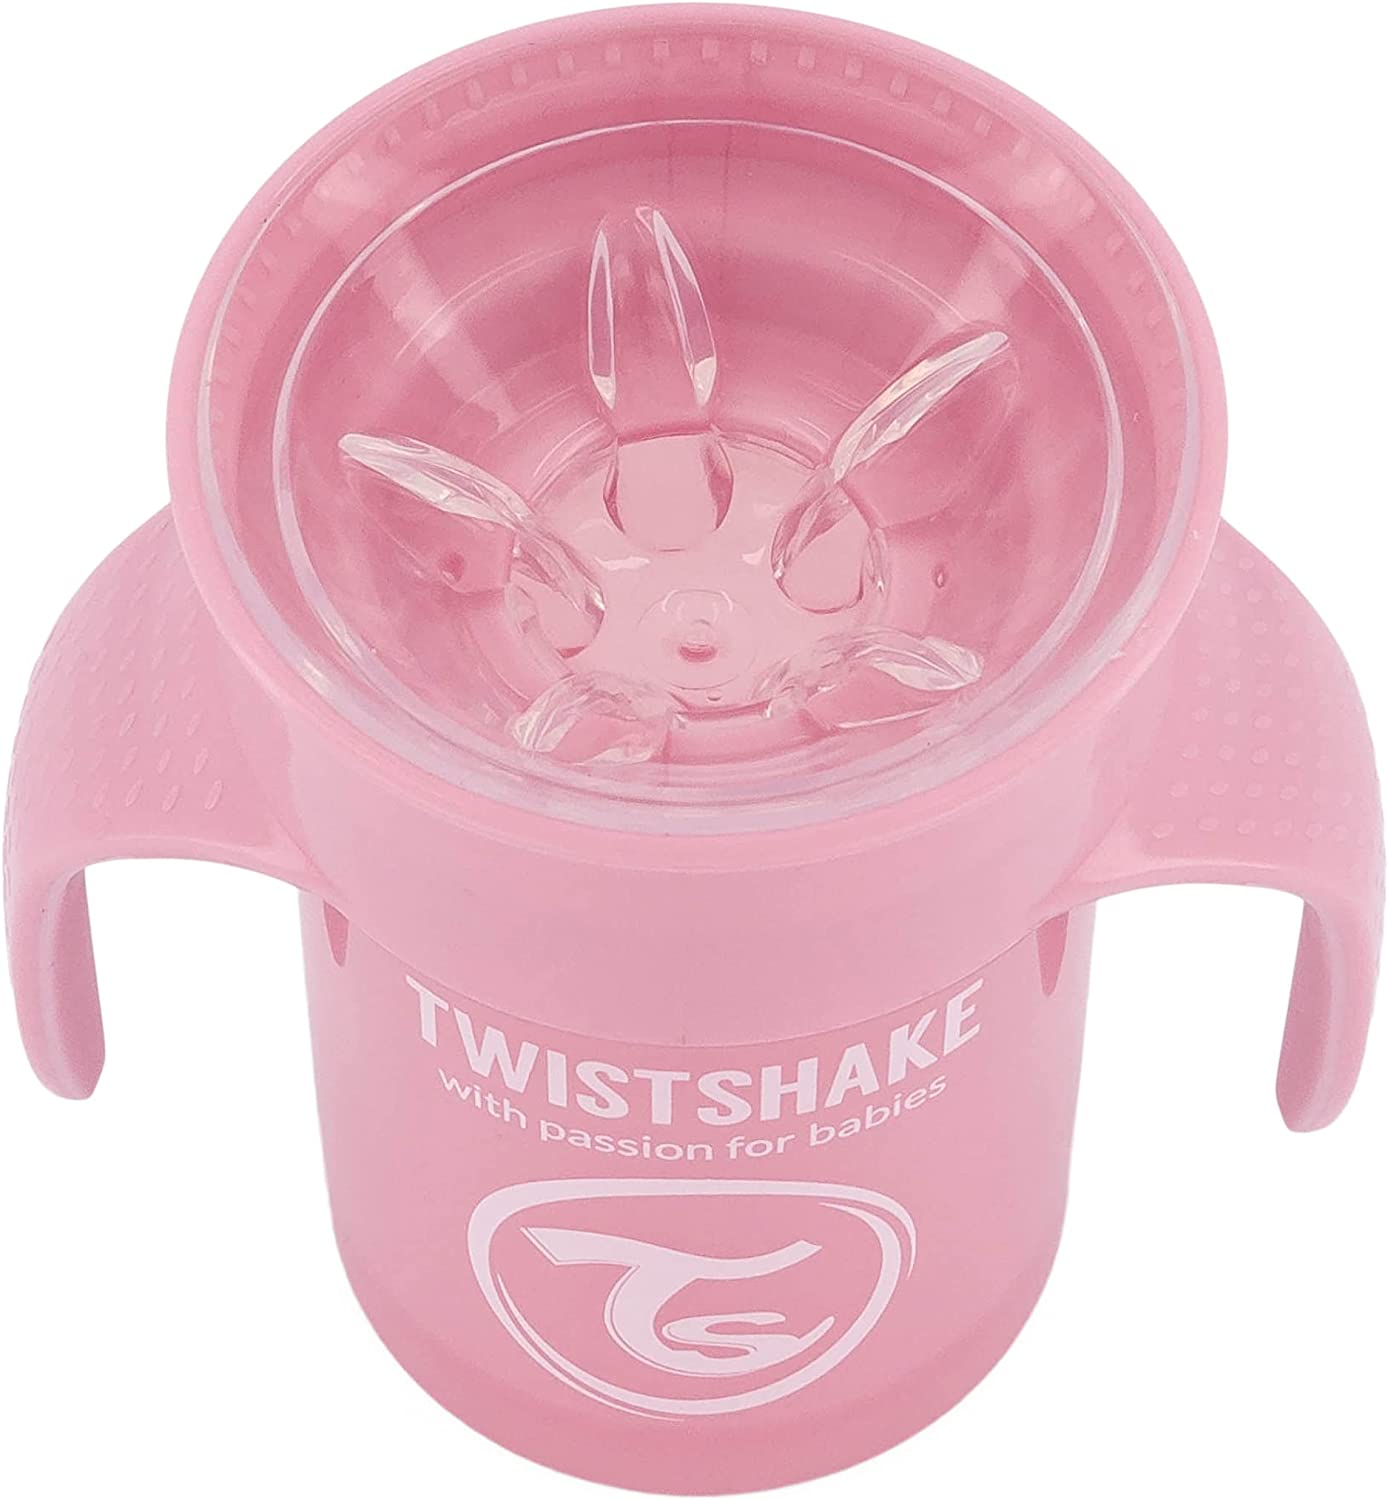 Vaso Twistshake Mini Cup Antiderrame 230ml 4 Meses+